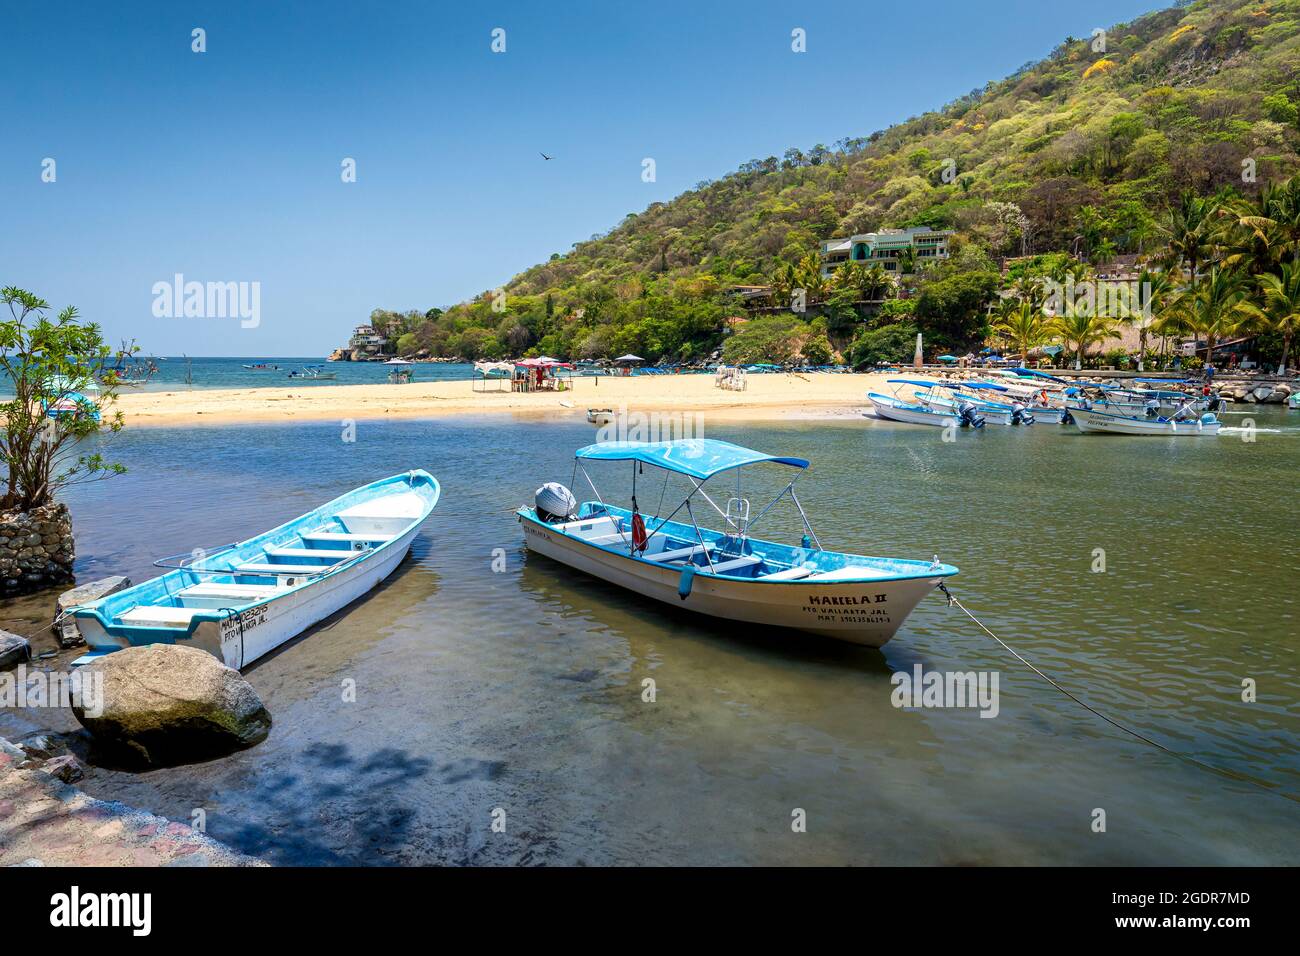 The harbor of Boca de Tomatlan, a fishing village just south of Puerto Vallarta, Mexico. Stock Photo